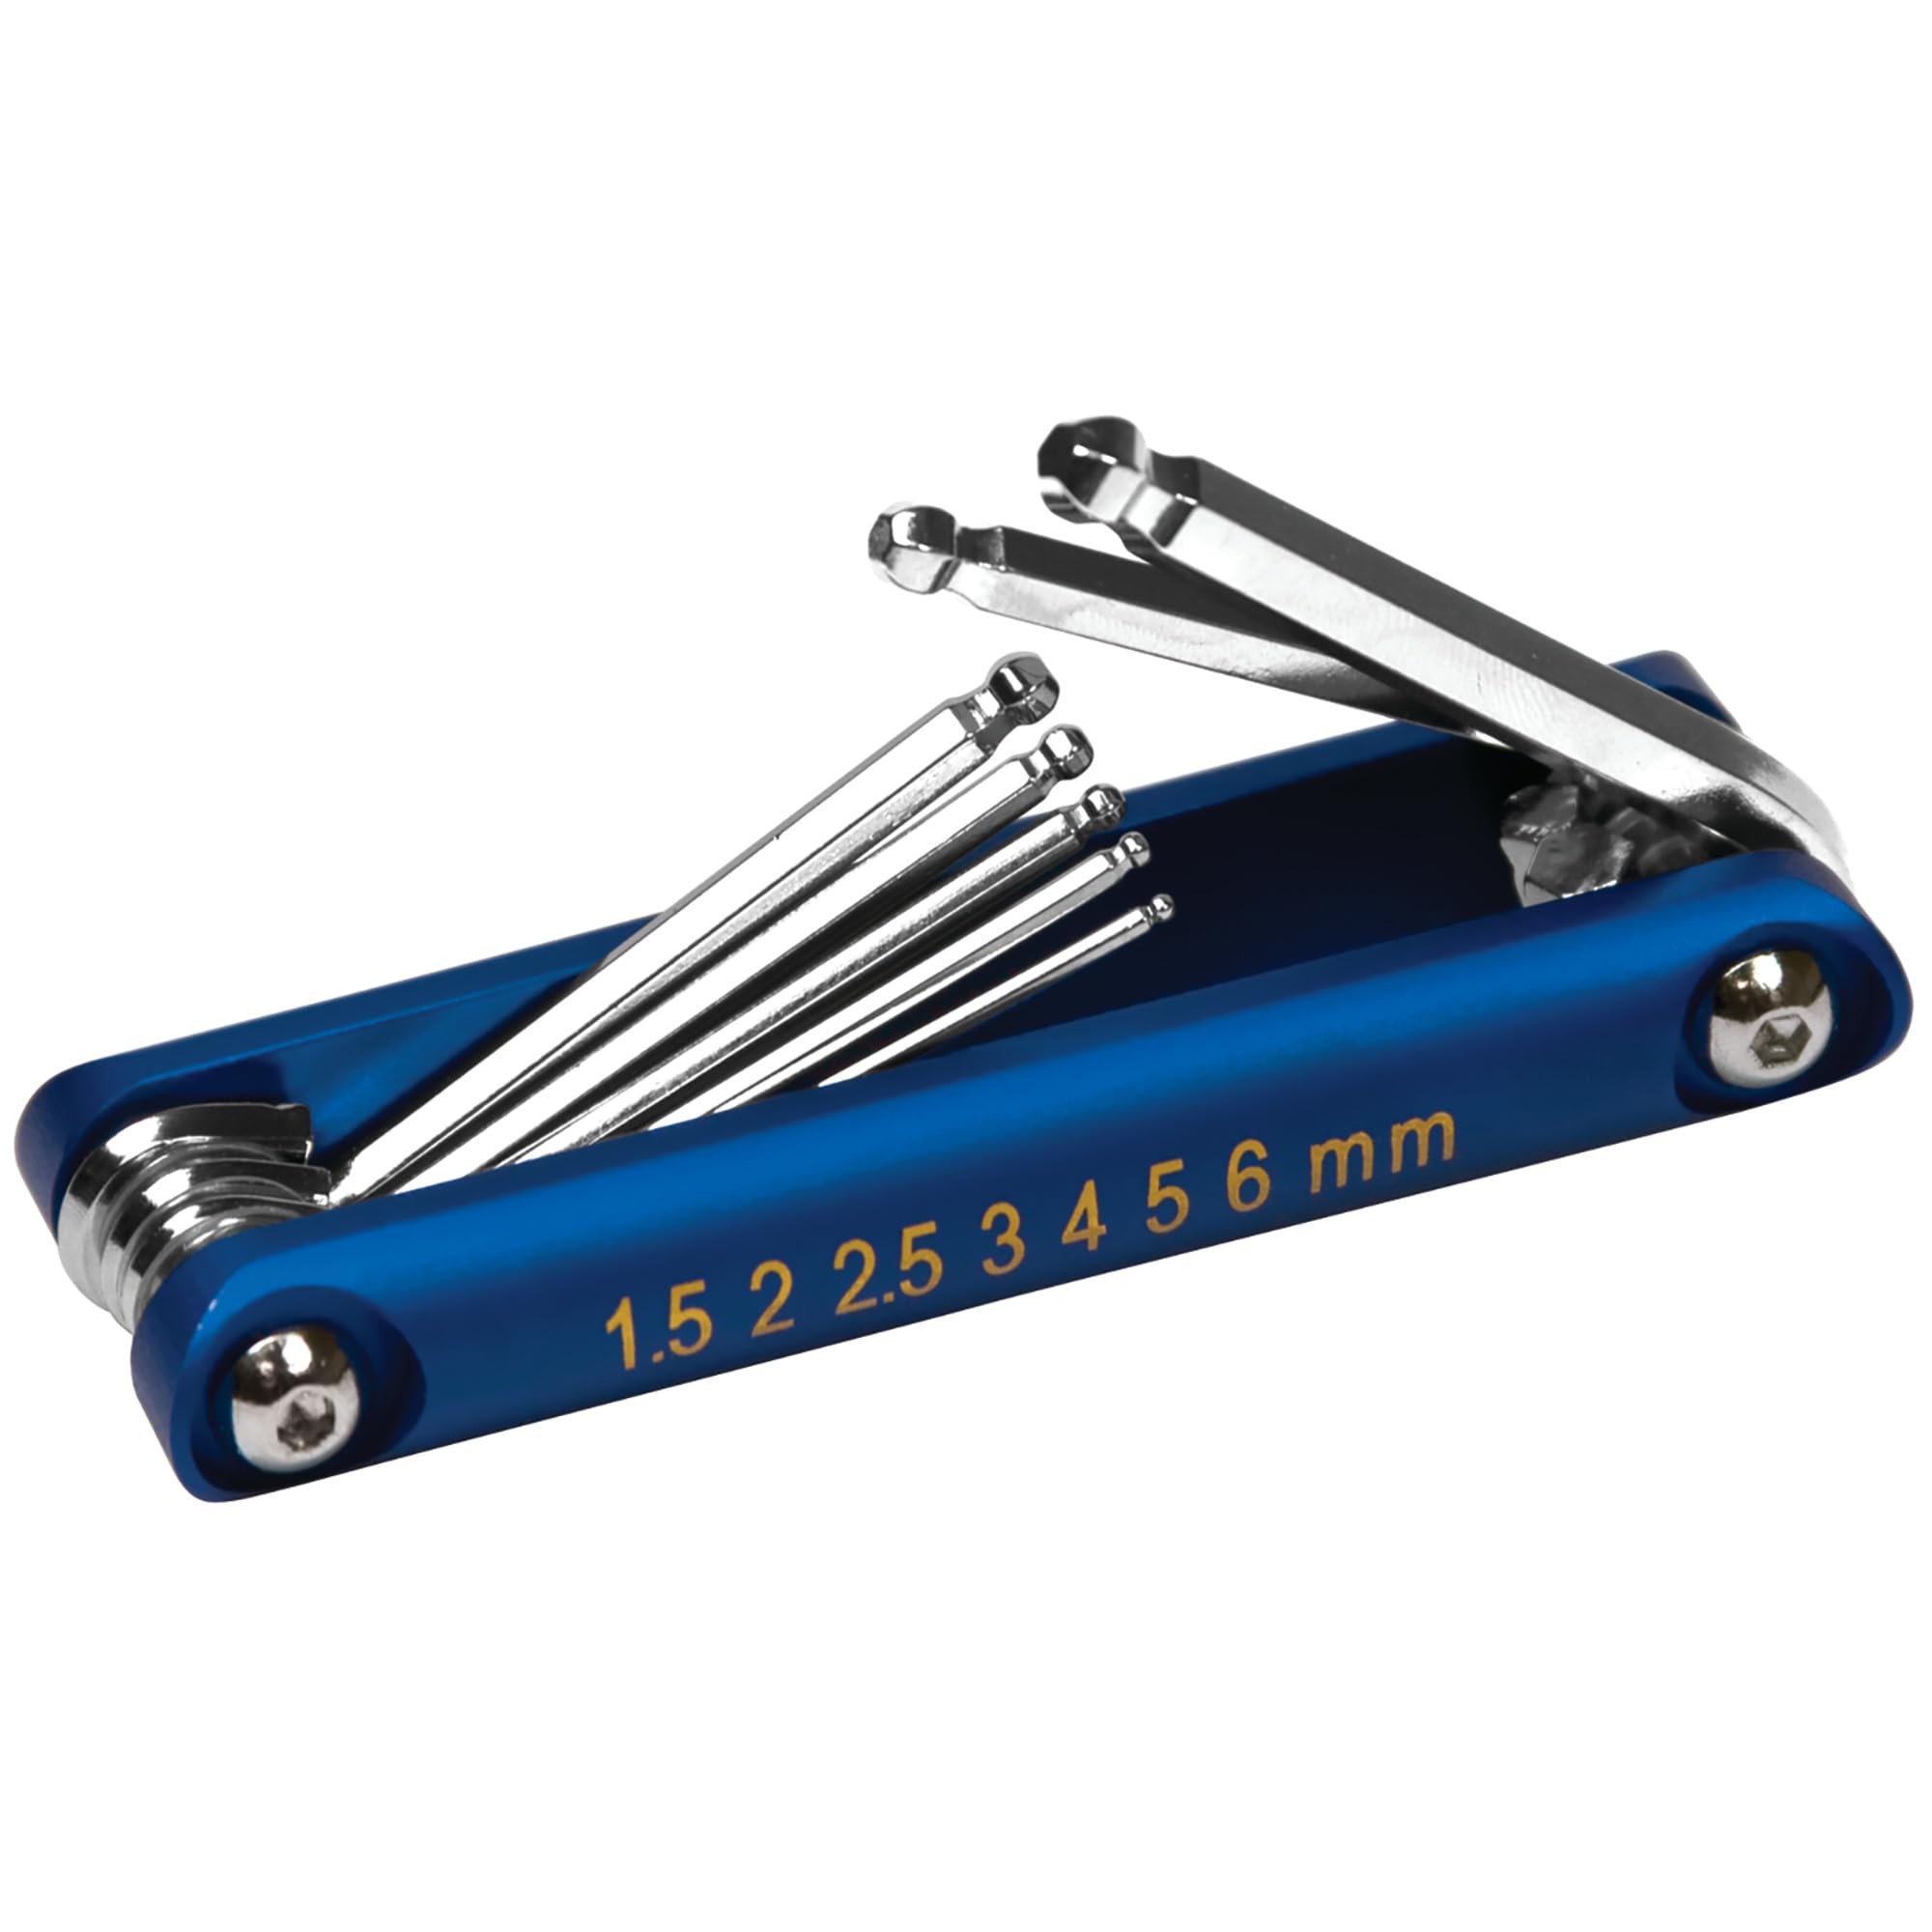 7-Pc Performance Tool Chrome Vanadium Metric Long Arm Hex Key Set $3.10 @ Amazon